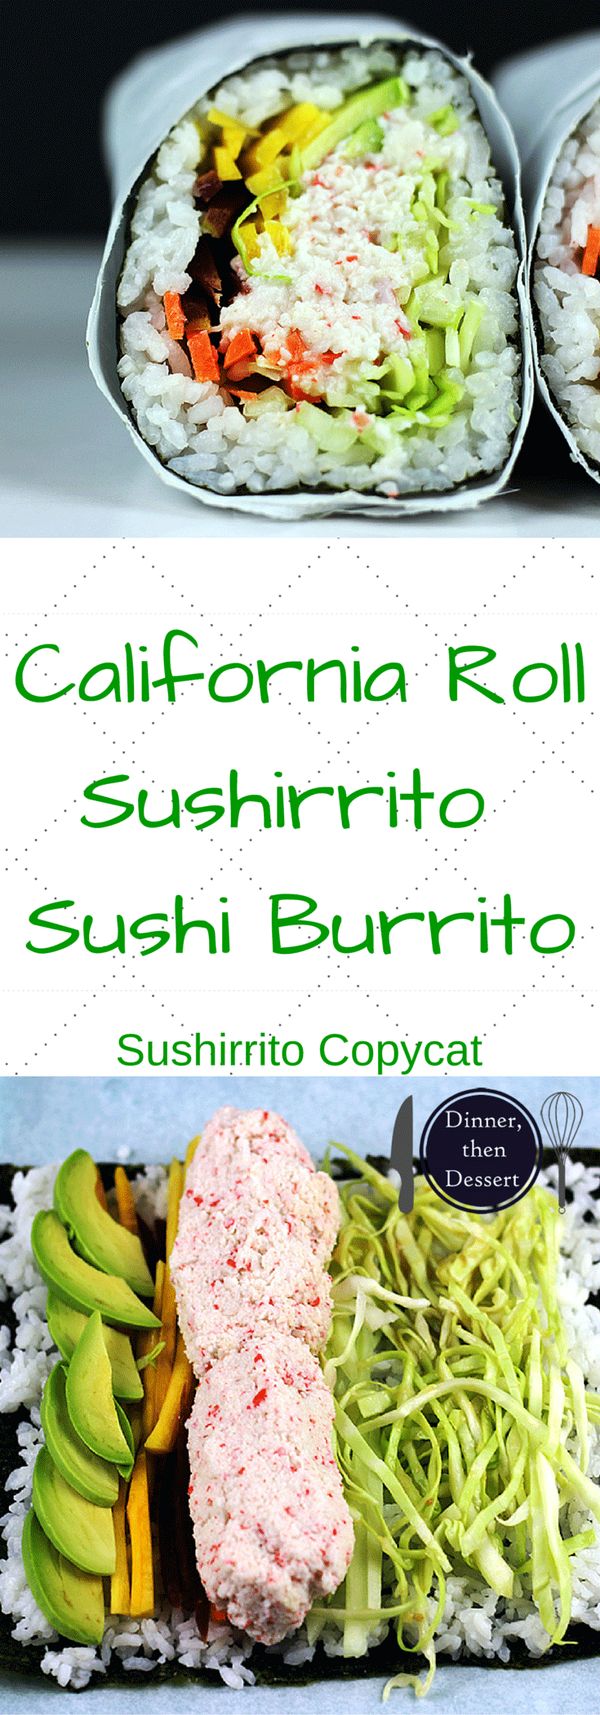 Imitation Crab California Roll Burrito